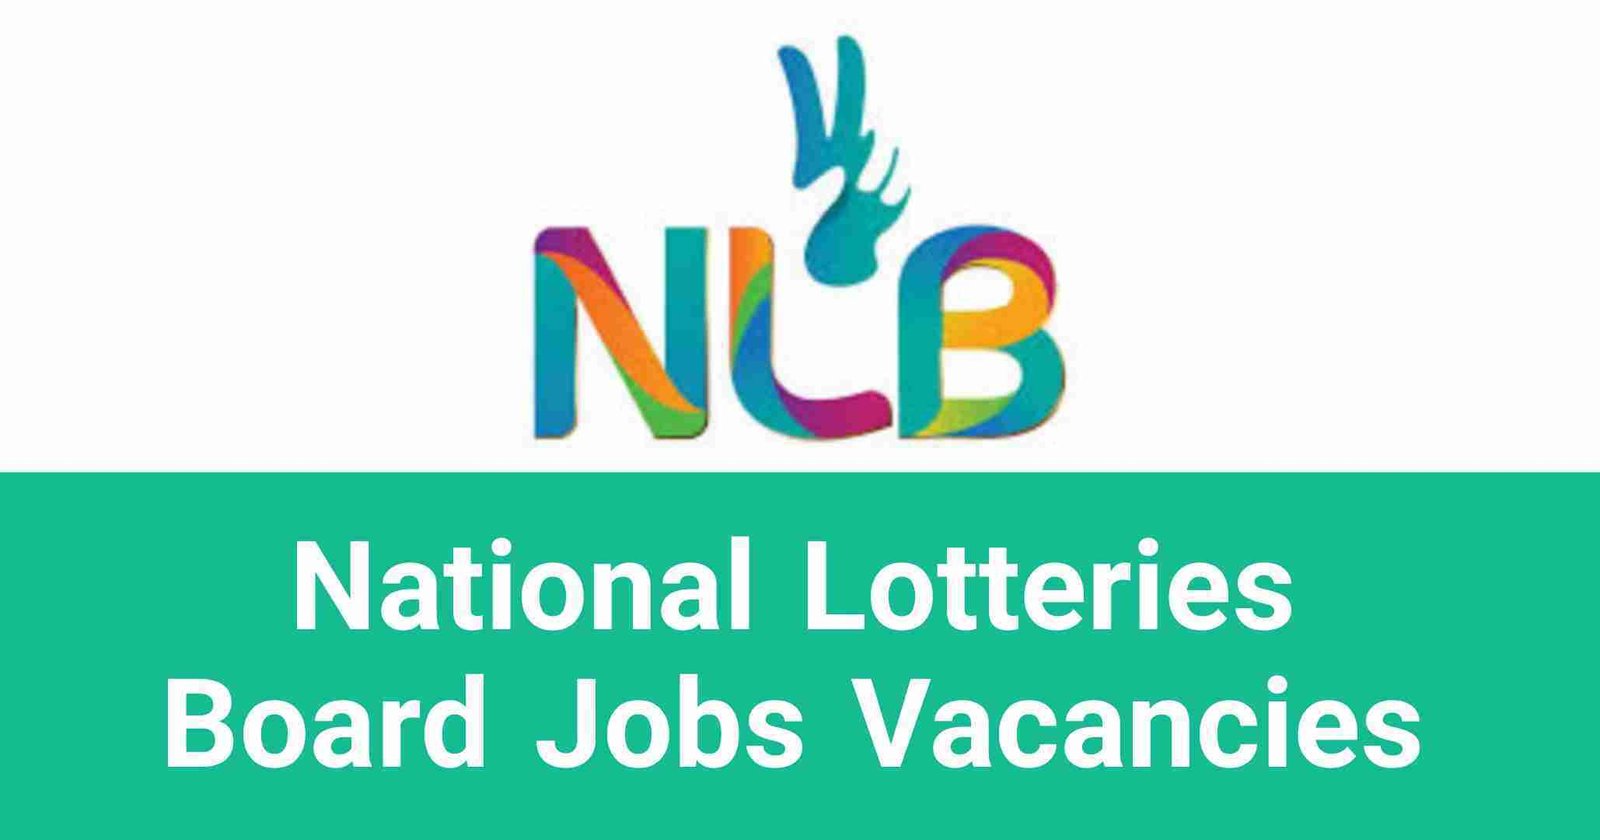 National Lotteries Board Jobs Vacancies